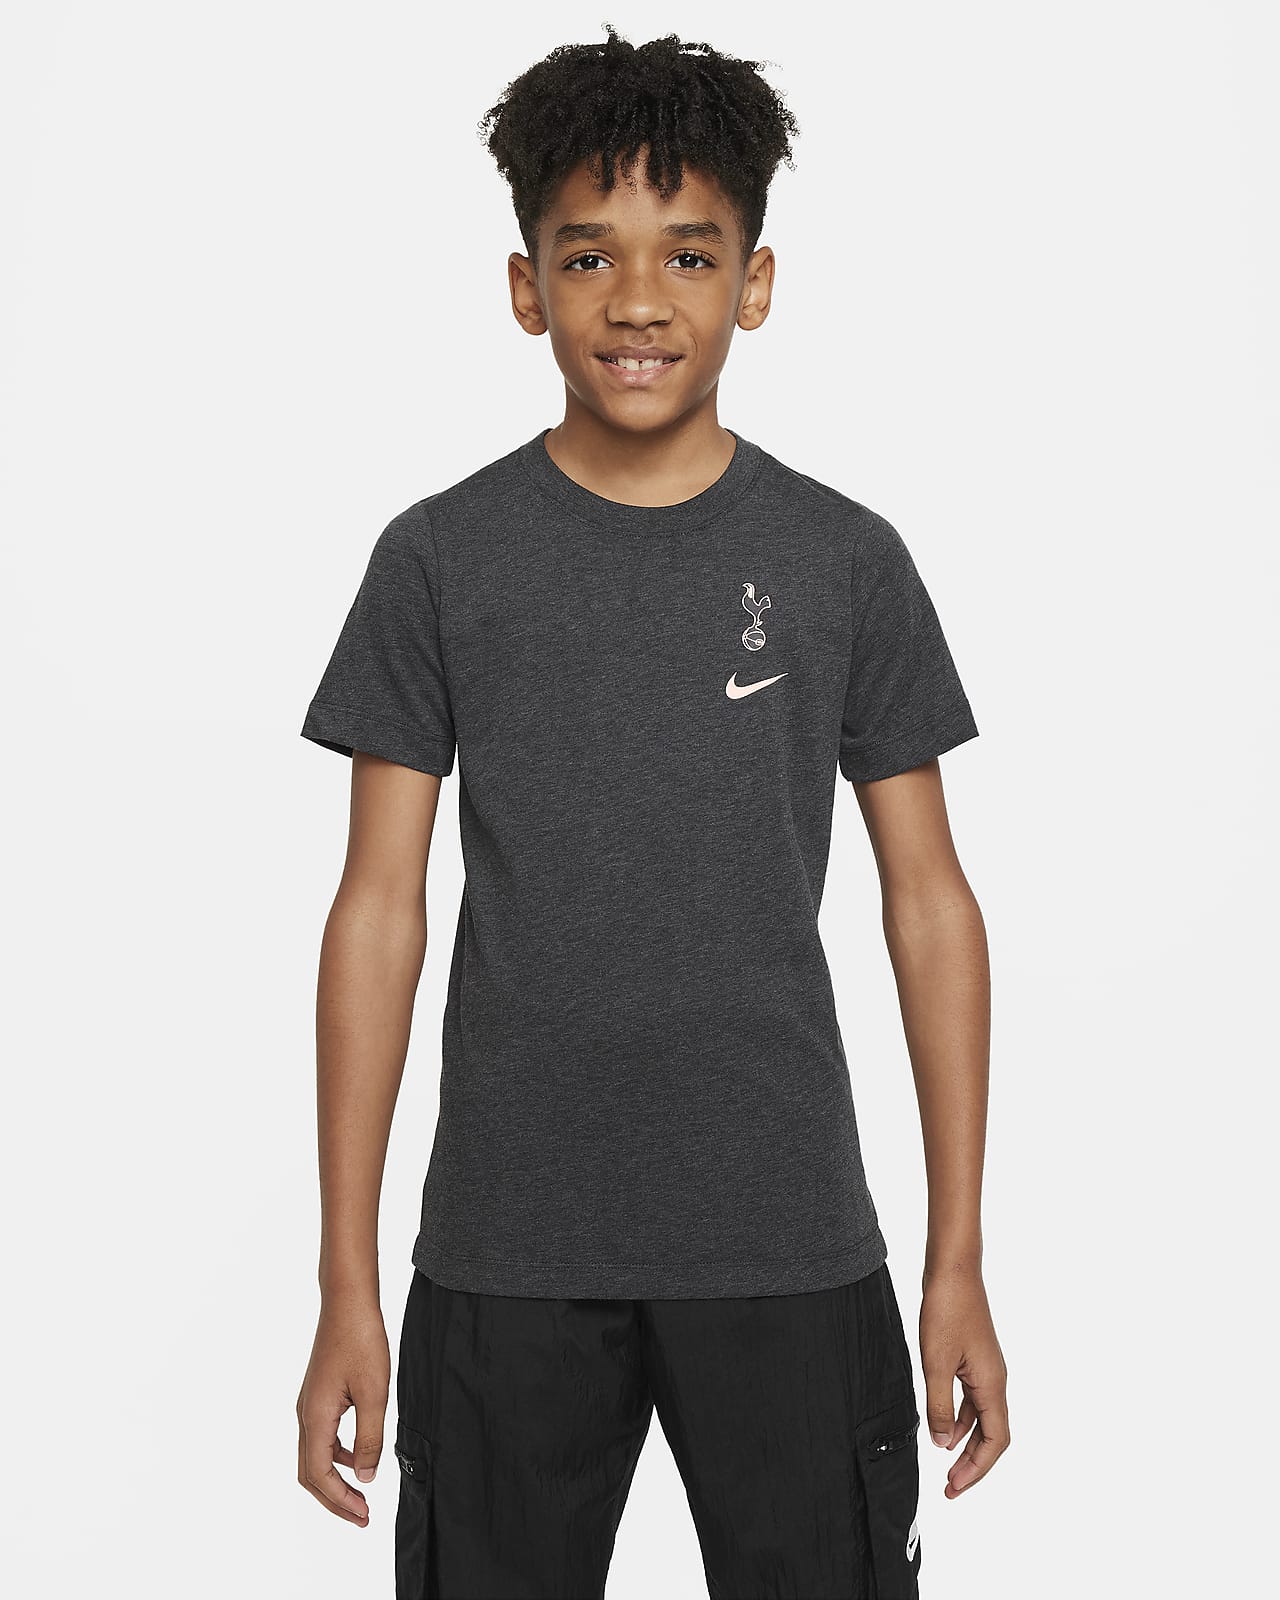 Tottenham Hotspur Camiseta Nike Football - Niño/a